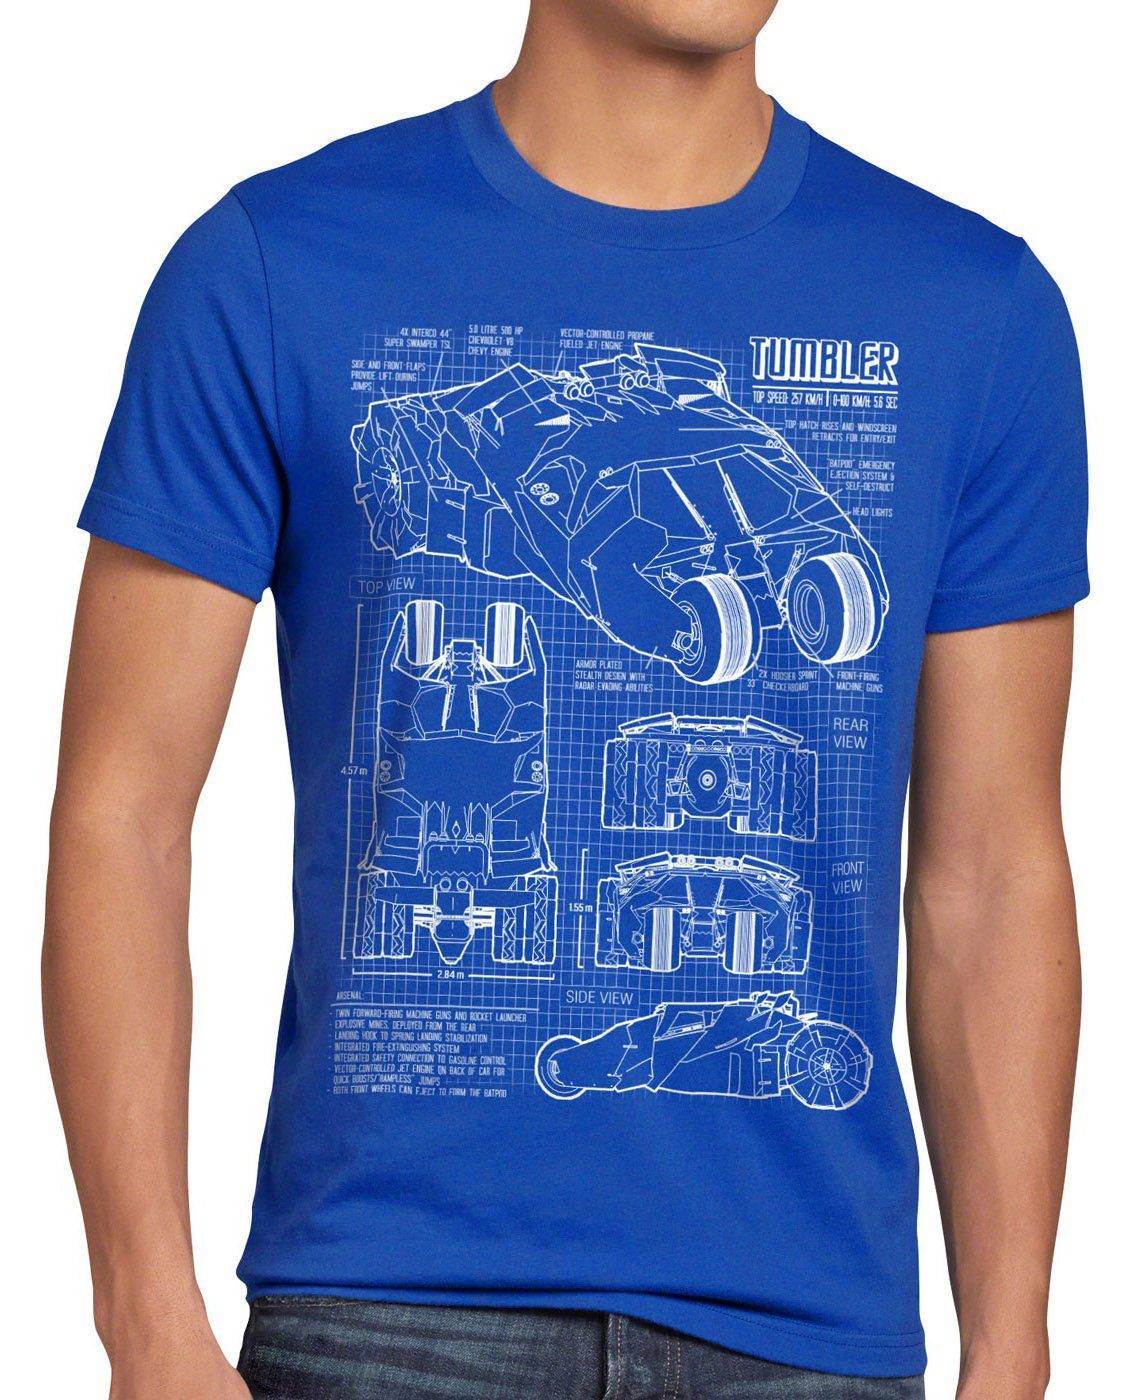 T-Shirt film city Gotham Herren knight game man style3 Tumbler dark Blaupause Print-Shirt mobil Bat